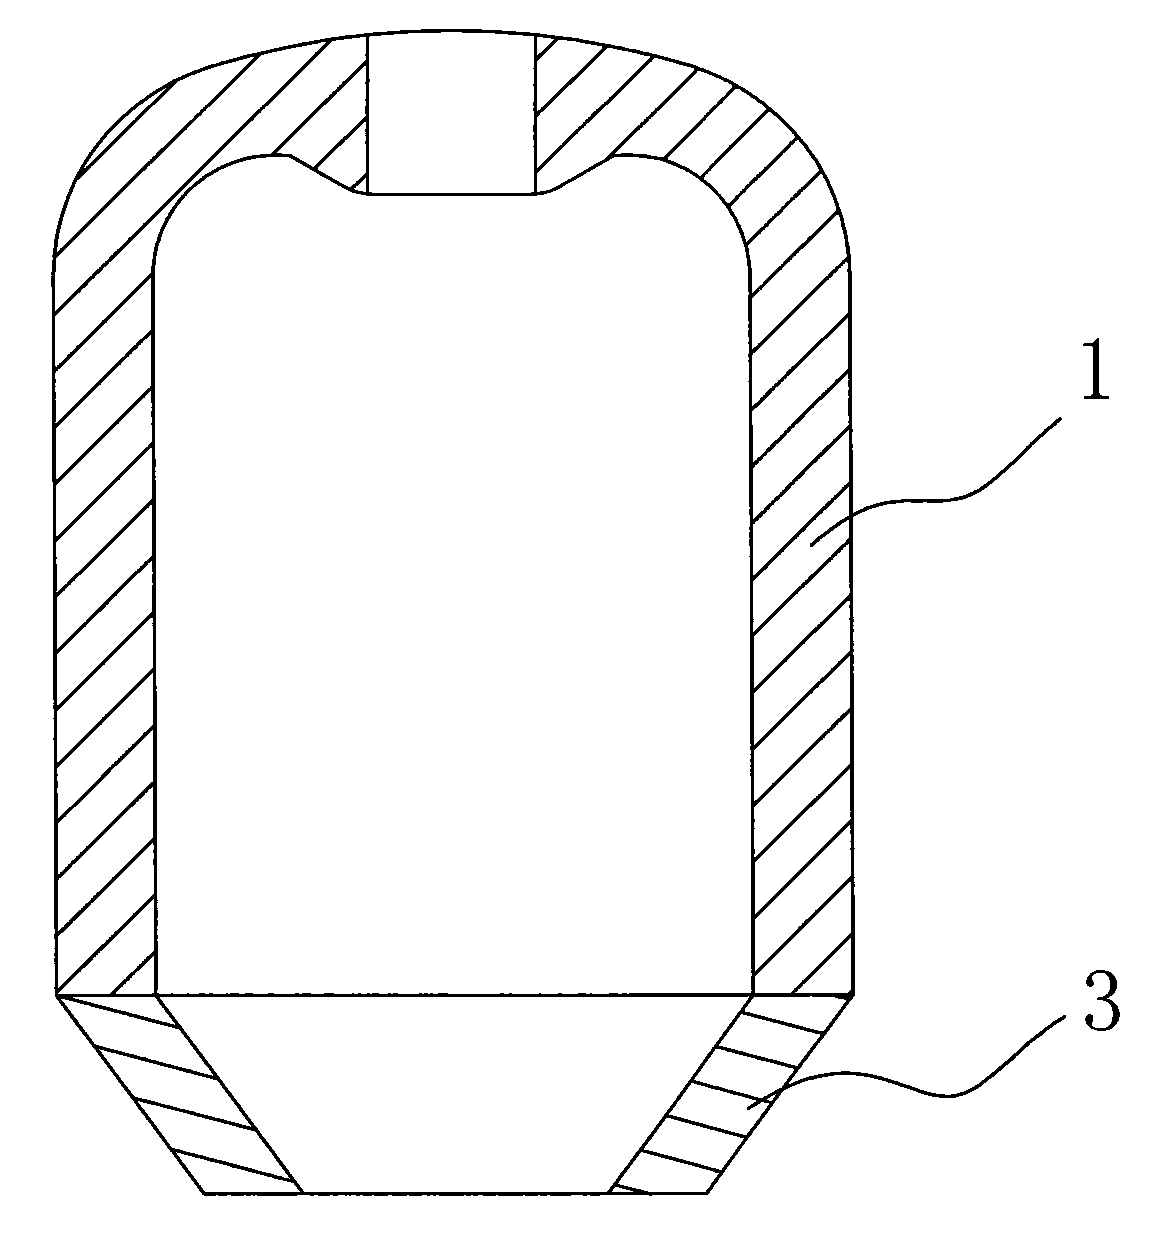 A cylindrical insulating riser base